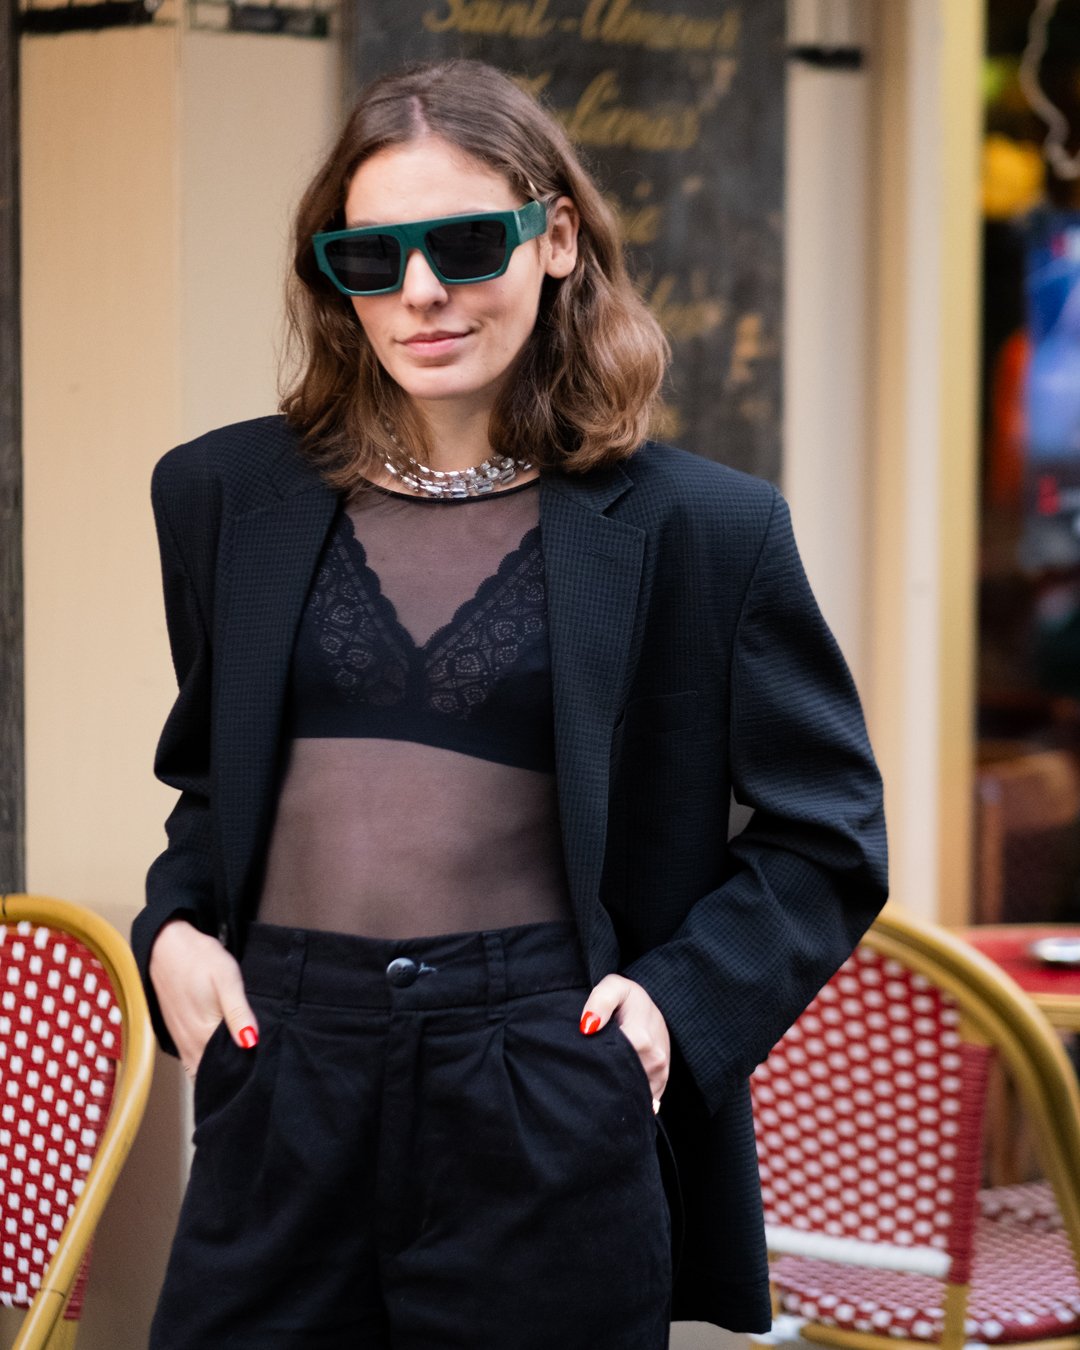 isabella aredes - blazer body transparente sutiã  - lingerie - primavera verão - paris fashion week - https://stealthelook.com.br